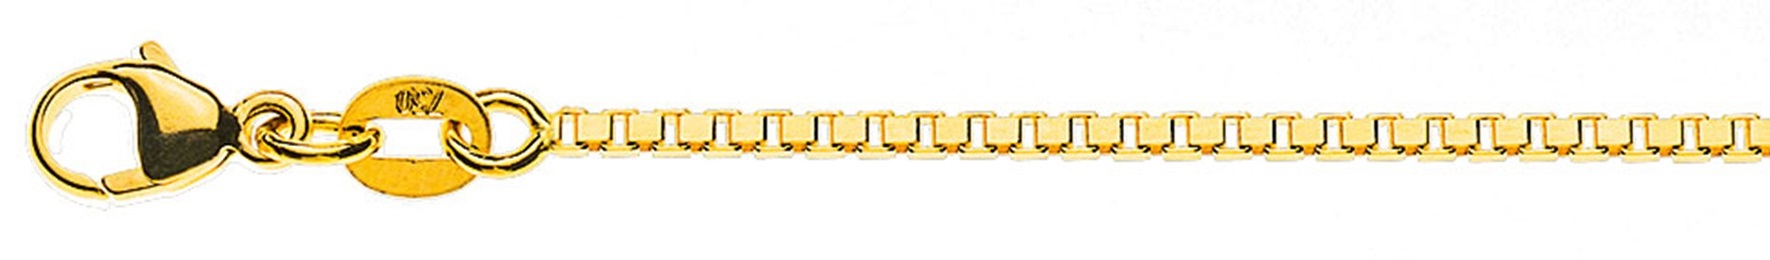 AURONOS Prestige Necklace yellow gold 18K Venetian chain diamond 55cm 1.4mm